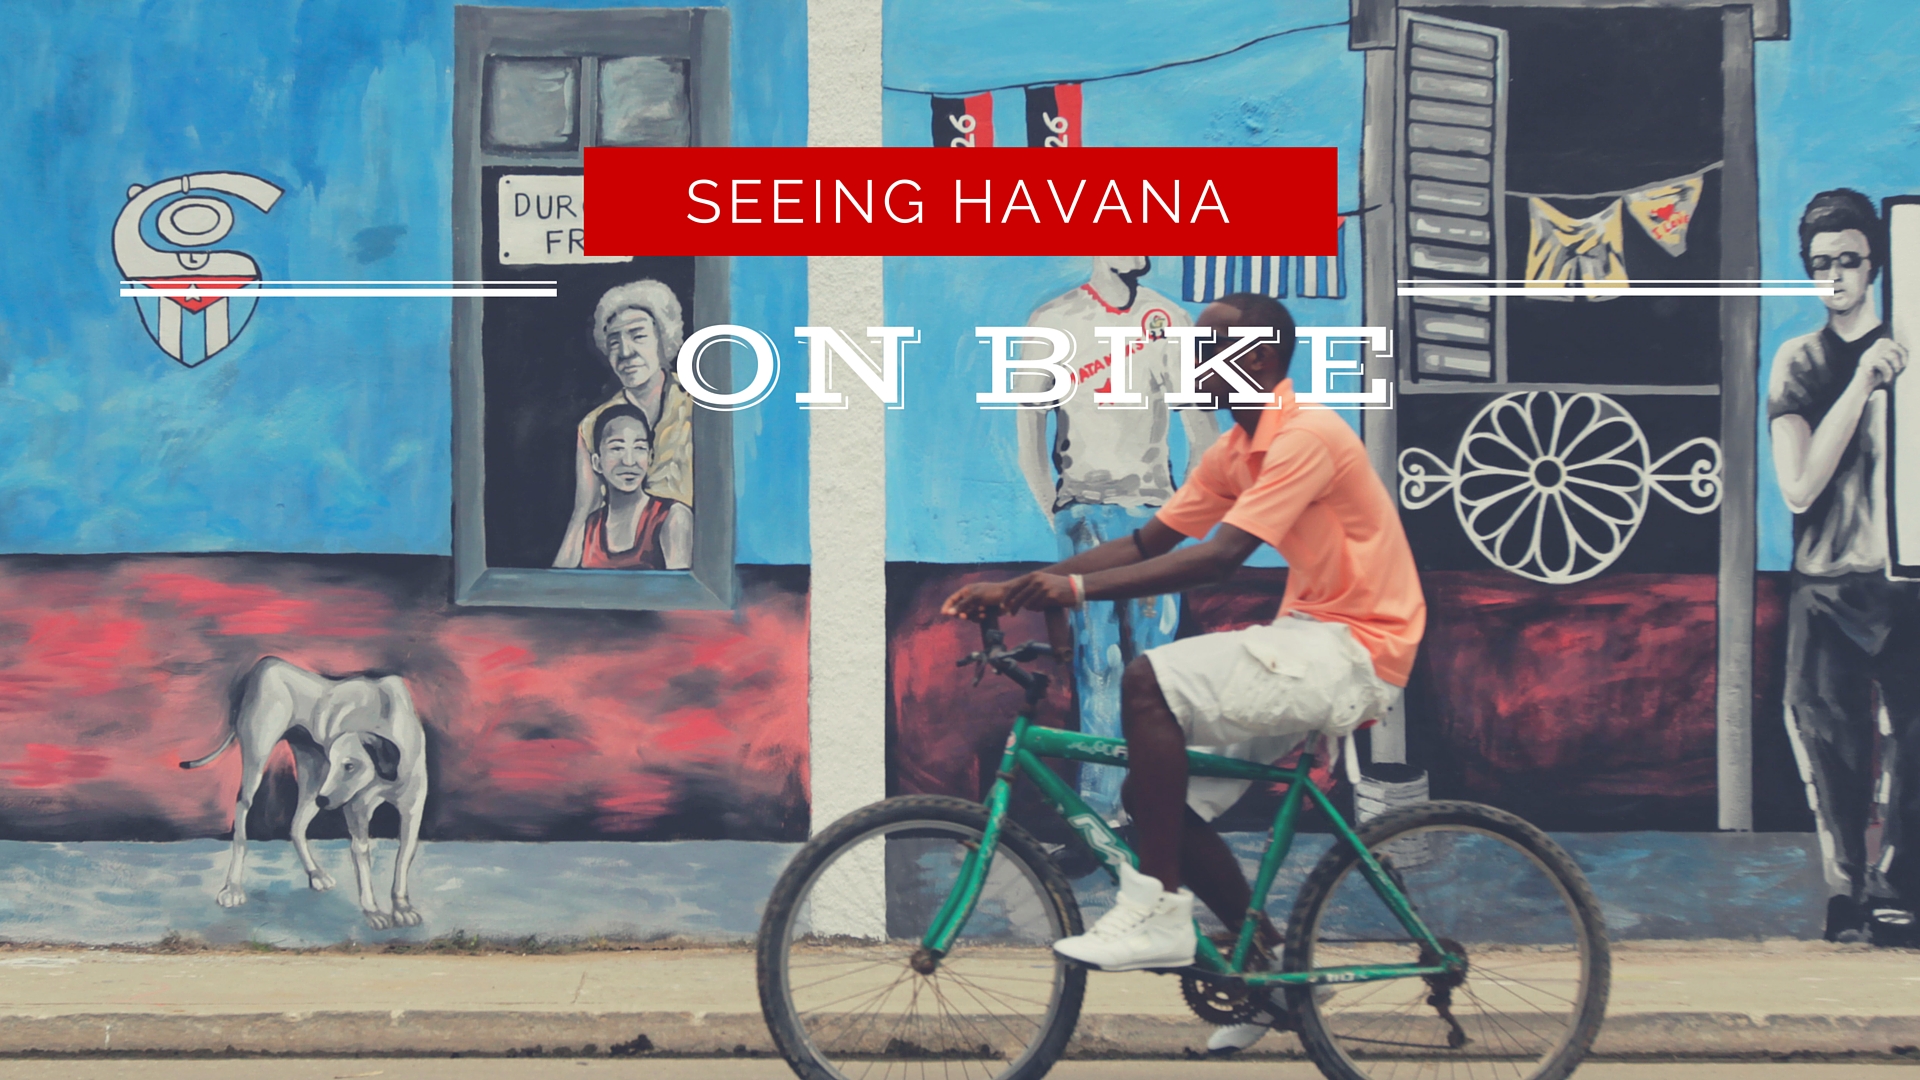 Havana on bike